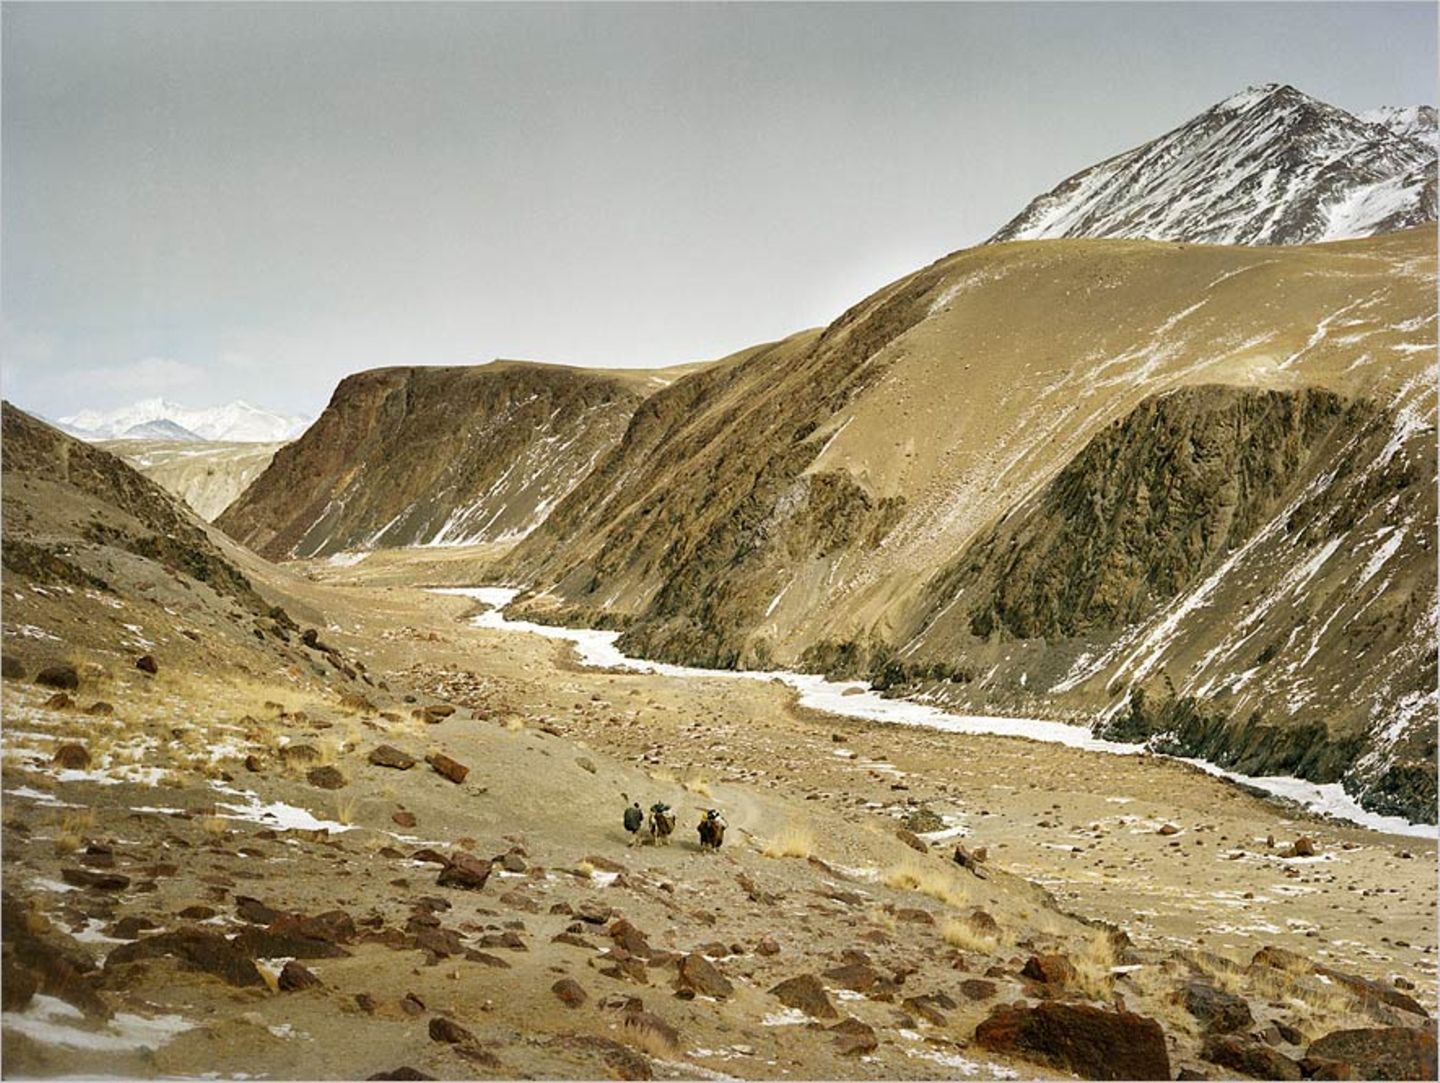 Pamir: Fotogalerie: Pamir - Bild 8